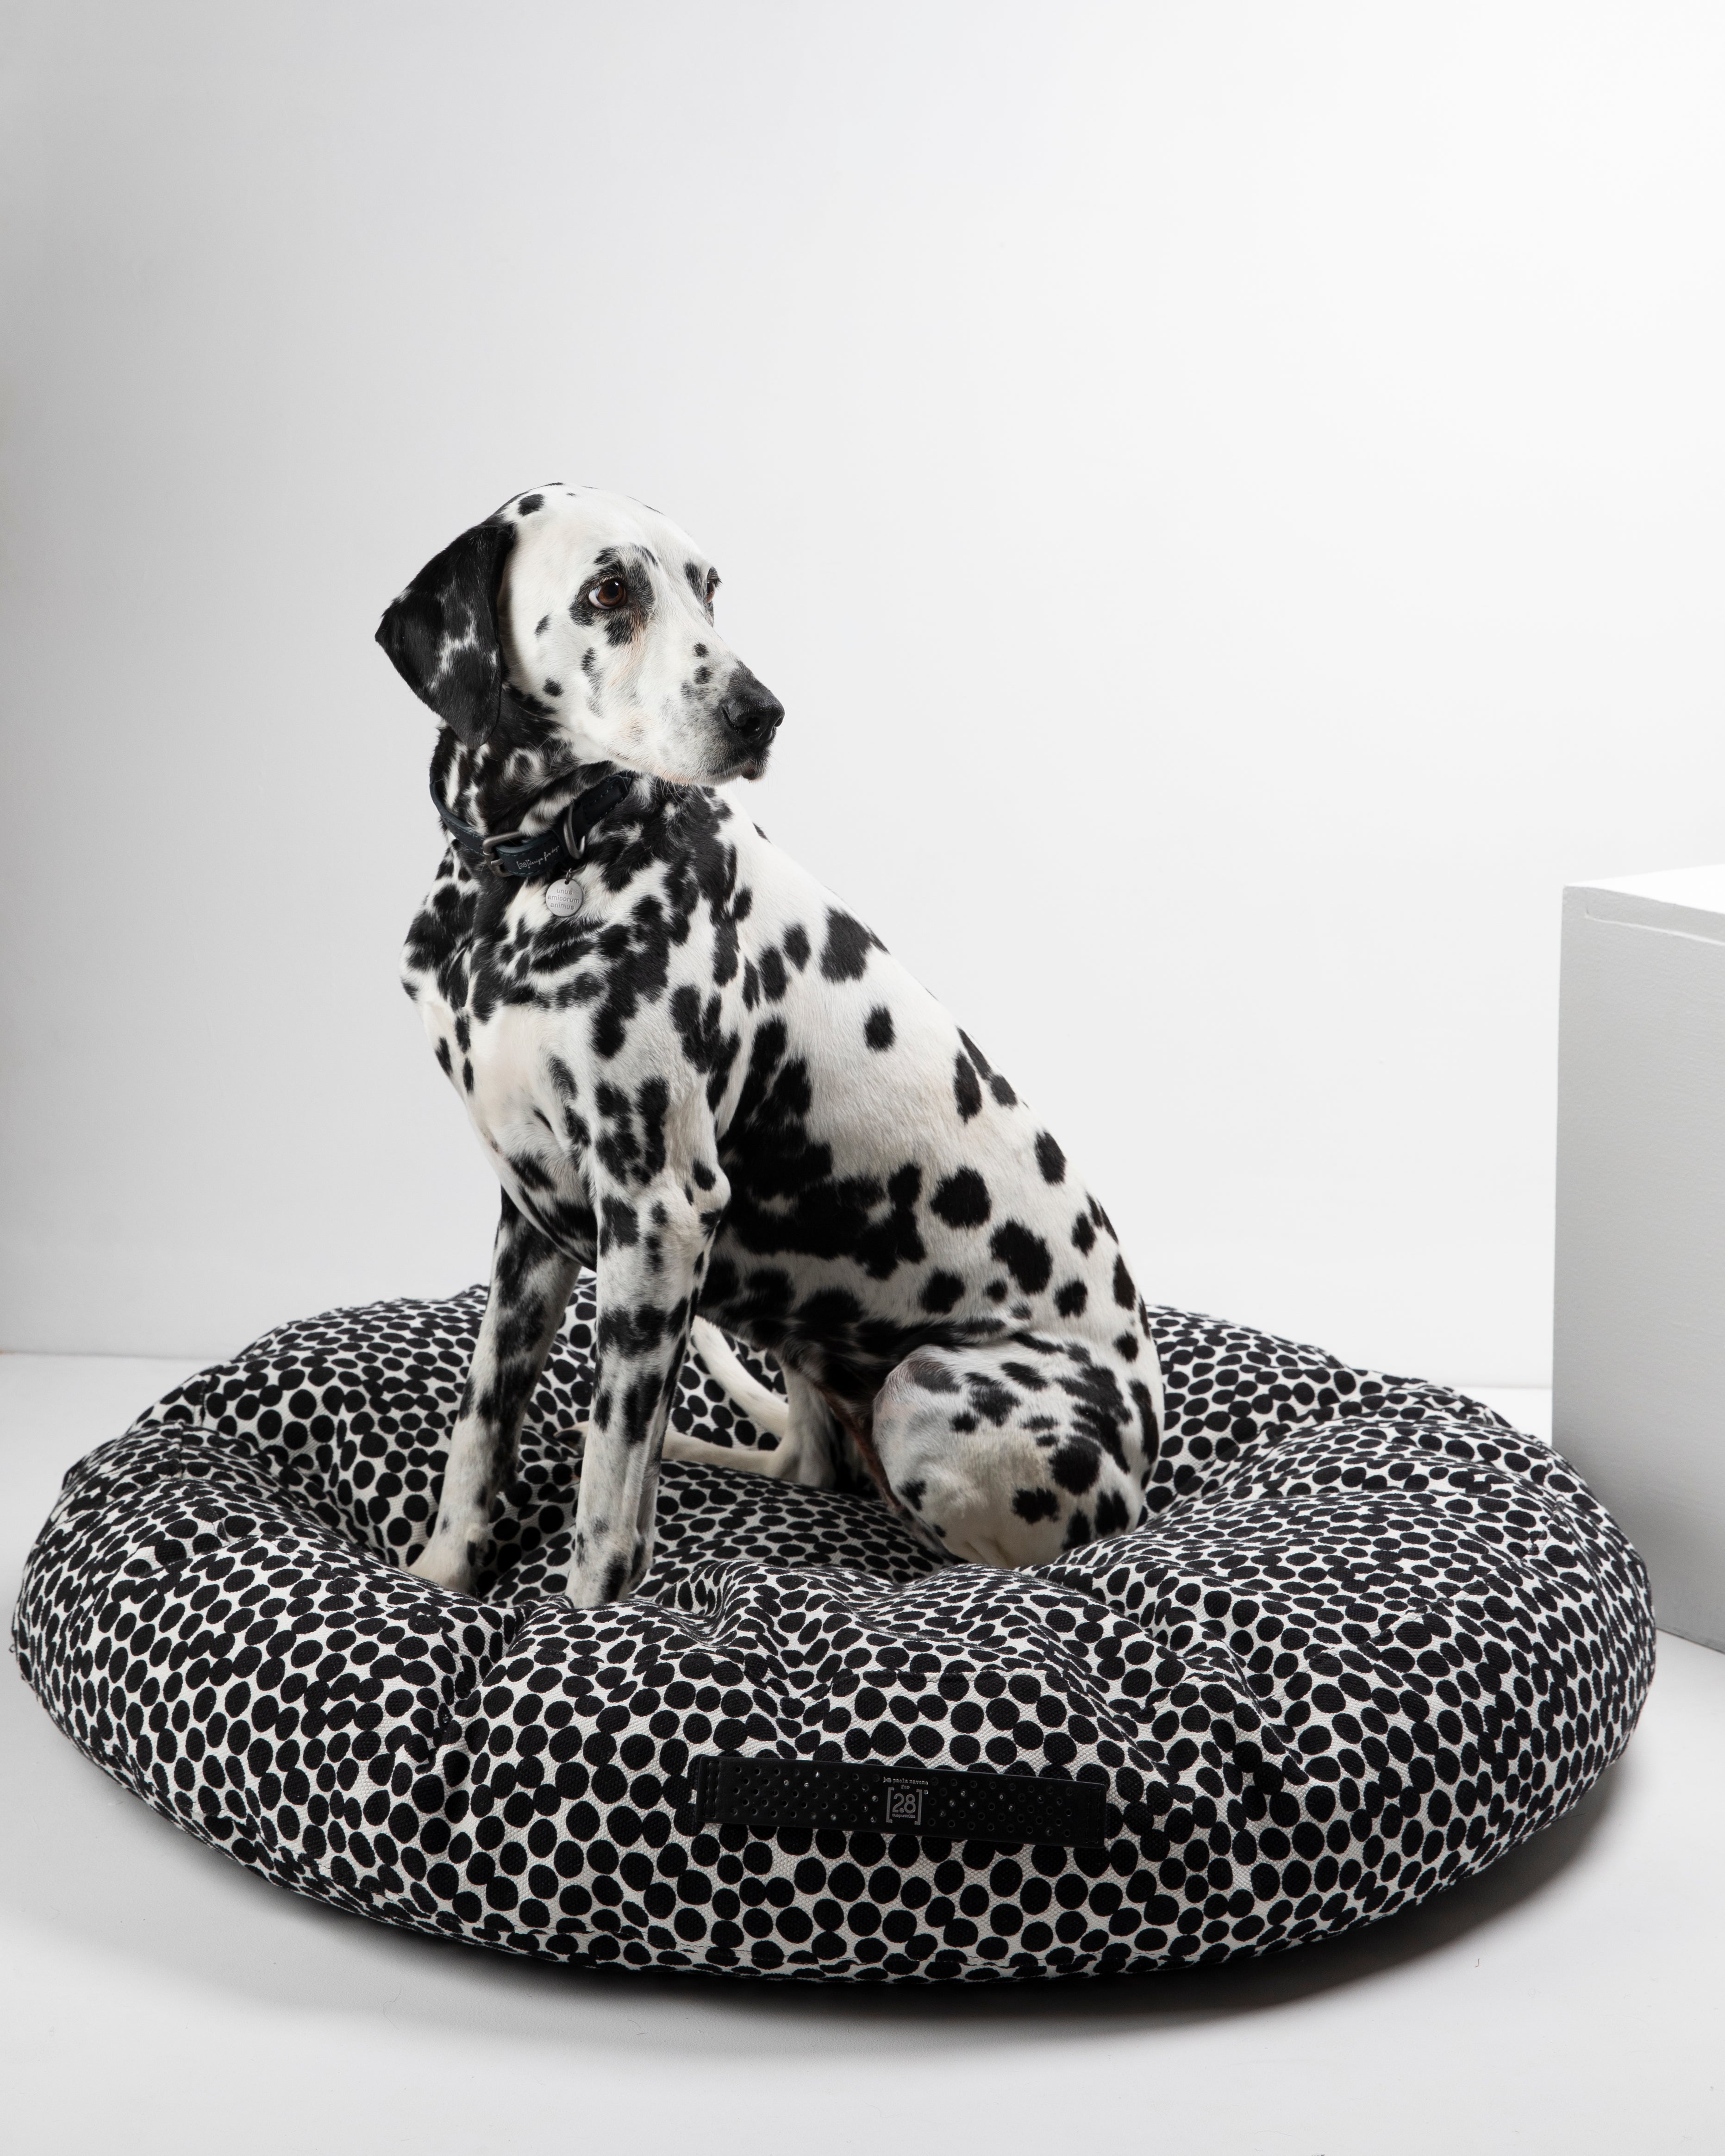 dotto-collection-paola-navone-dog-cushion-6.jpg